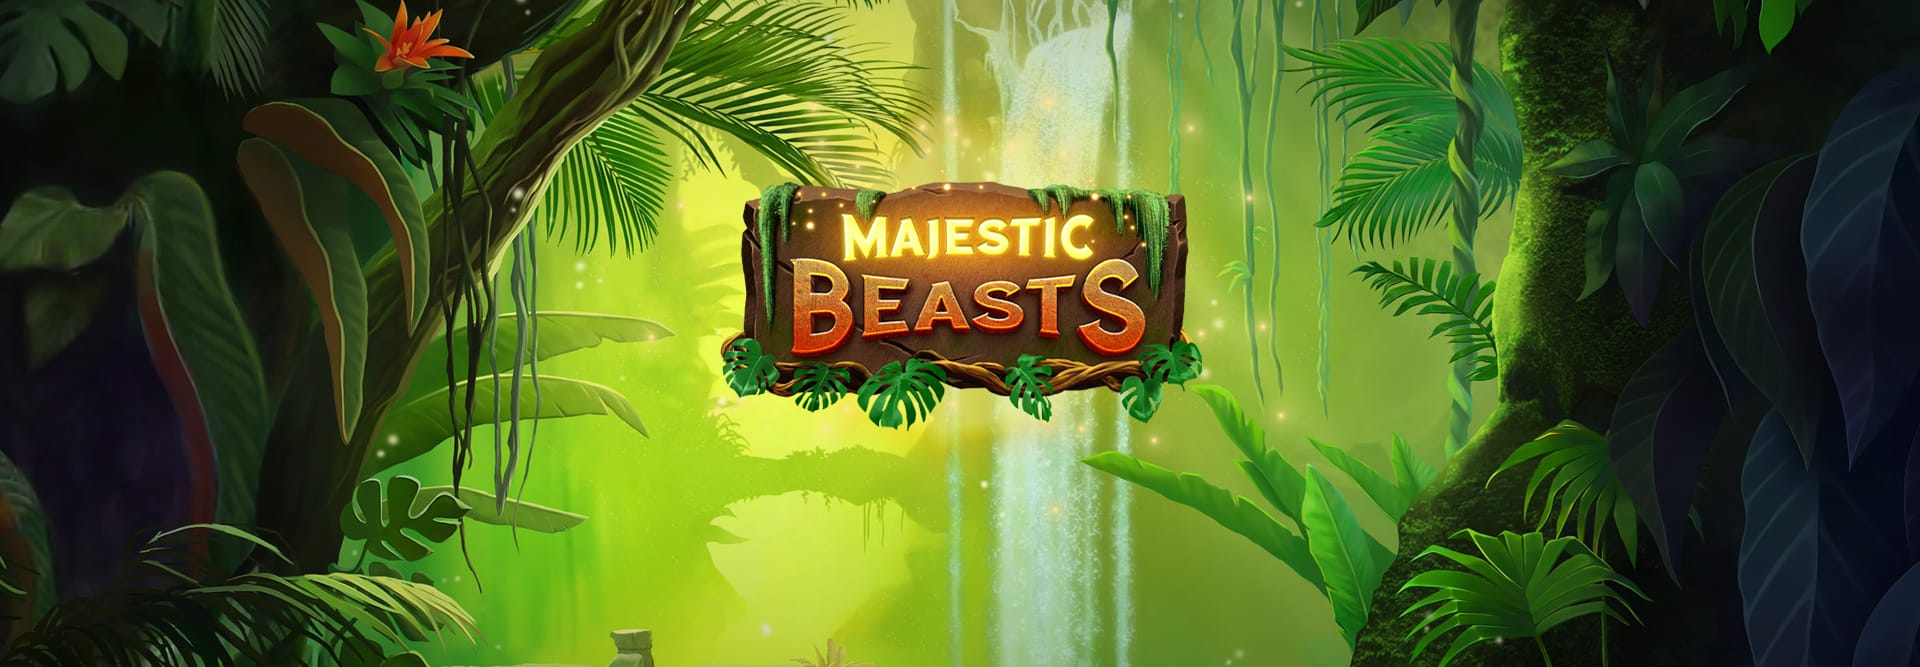 Majestic Beasts Online Slot